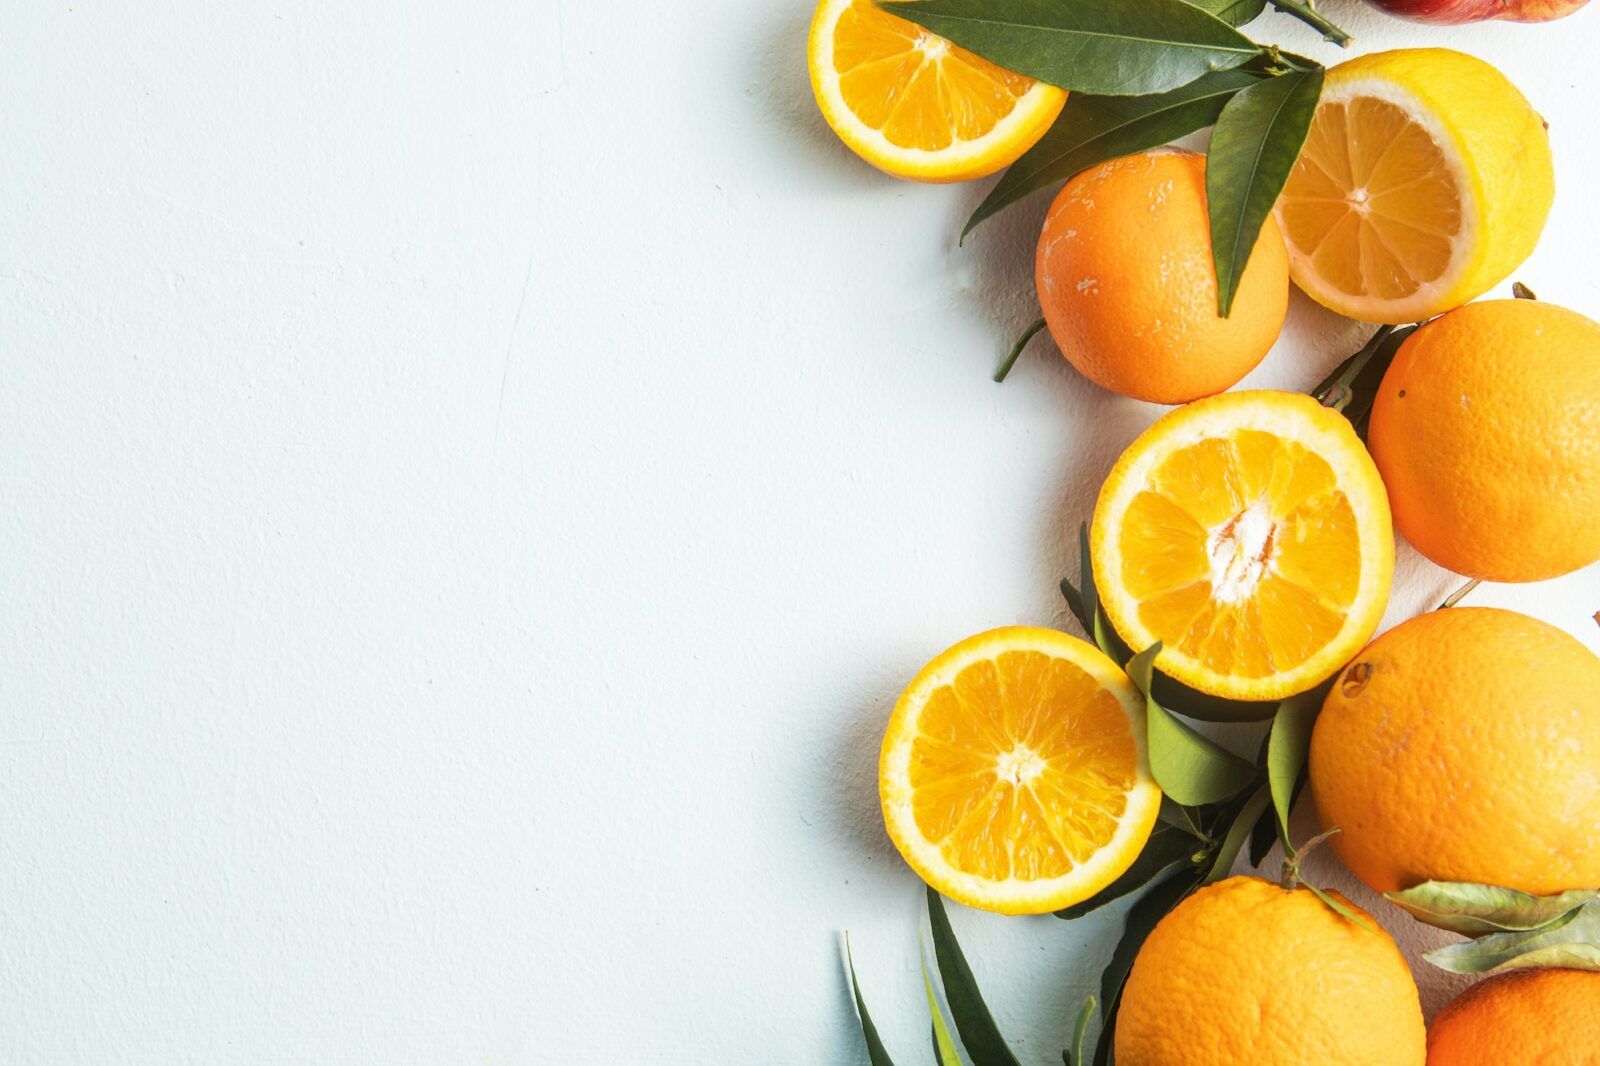 Healthy fruits, orange fruits background. Slices of citrus fruits - oranges.